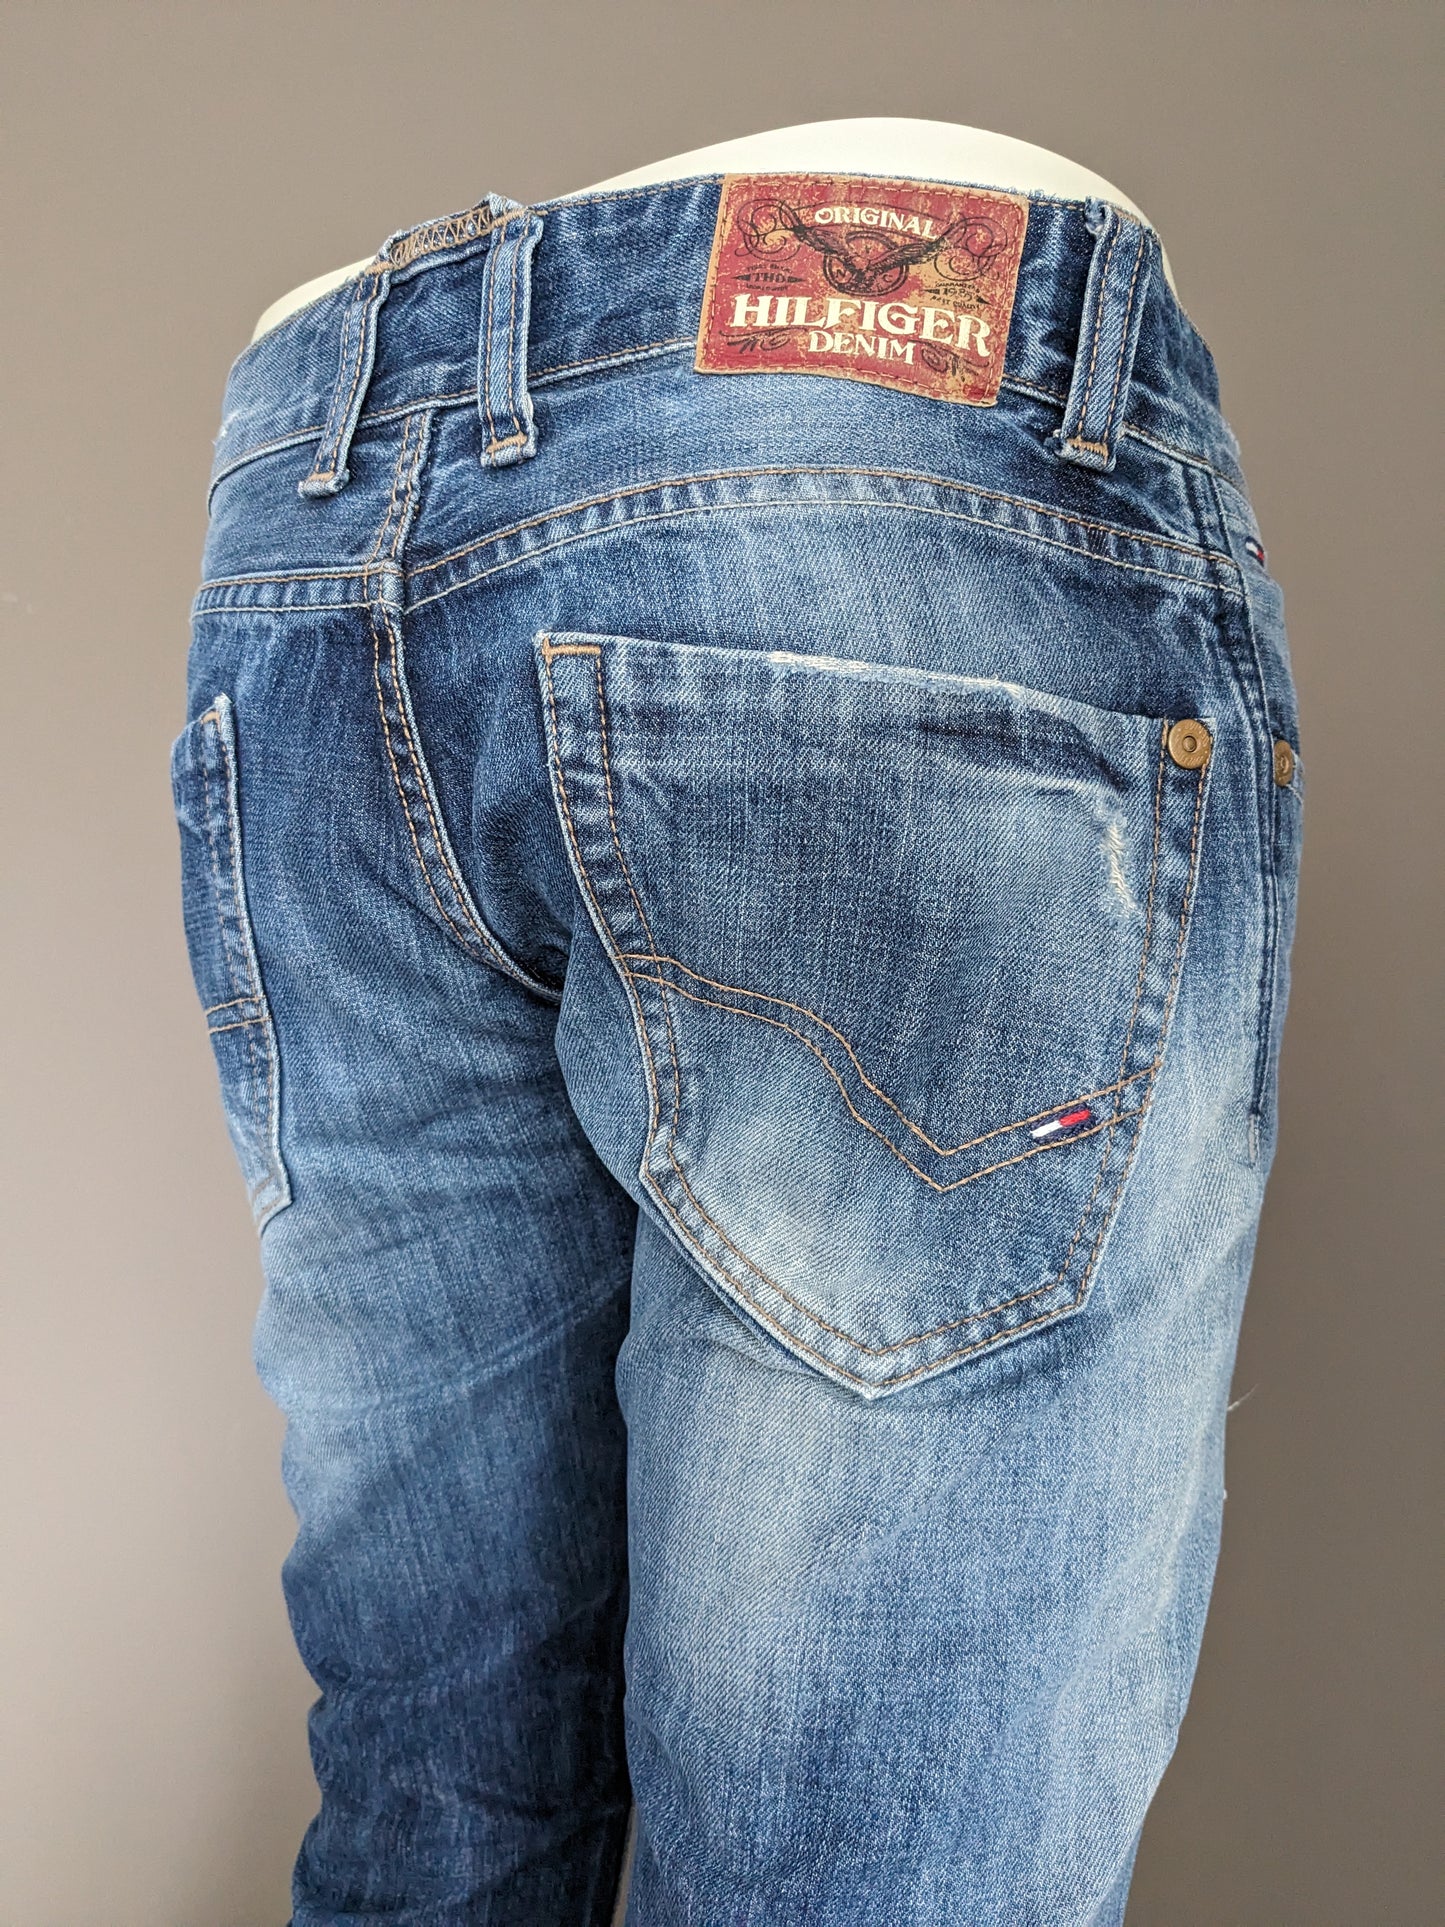 Tommy Hilfiger Jeans. Blue colored. Size W29 - L32. Type Rogar. Regular fit.